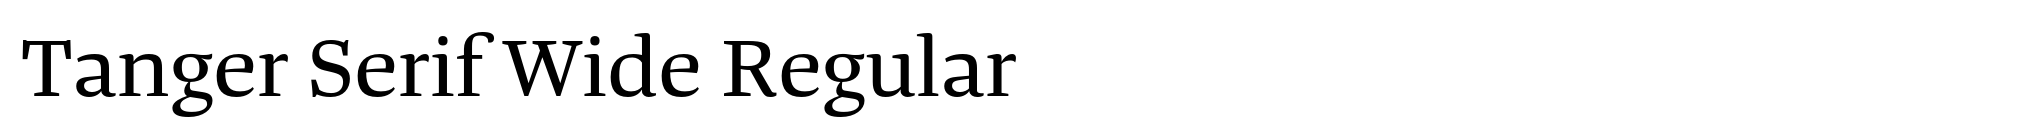 Tanger Serif Wide Regular image